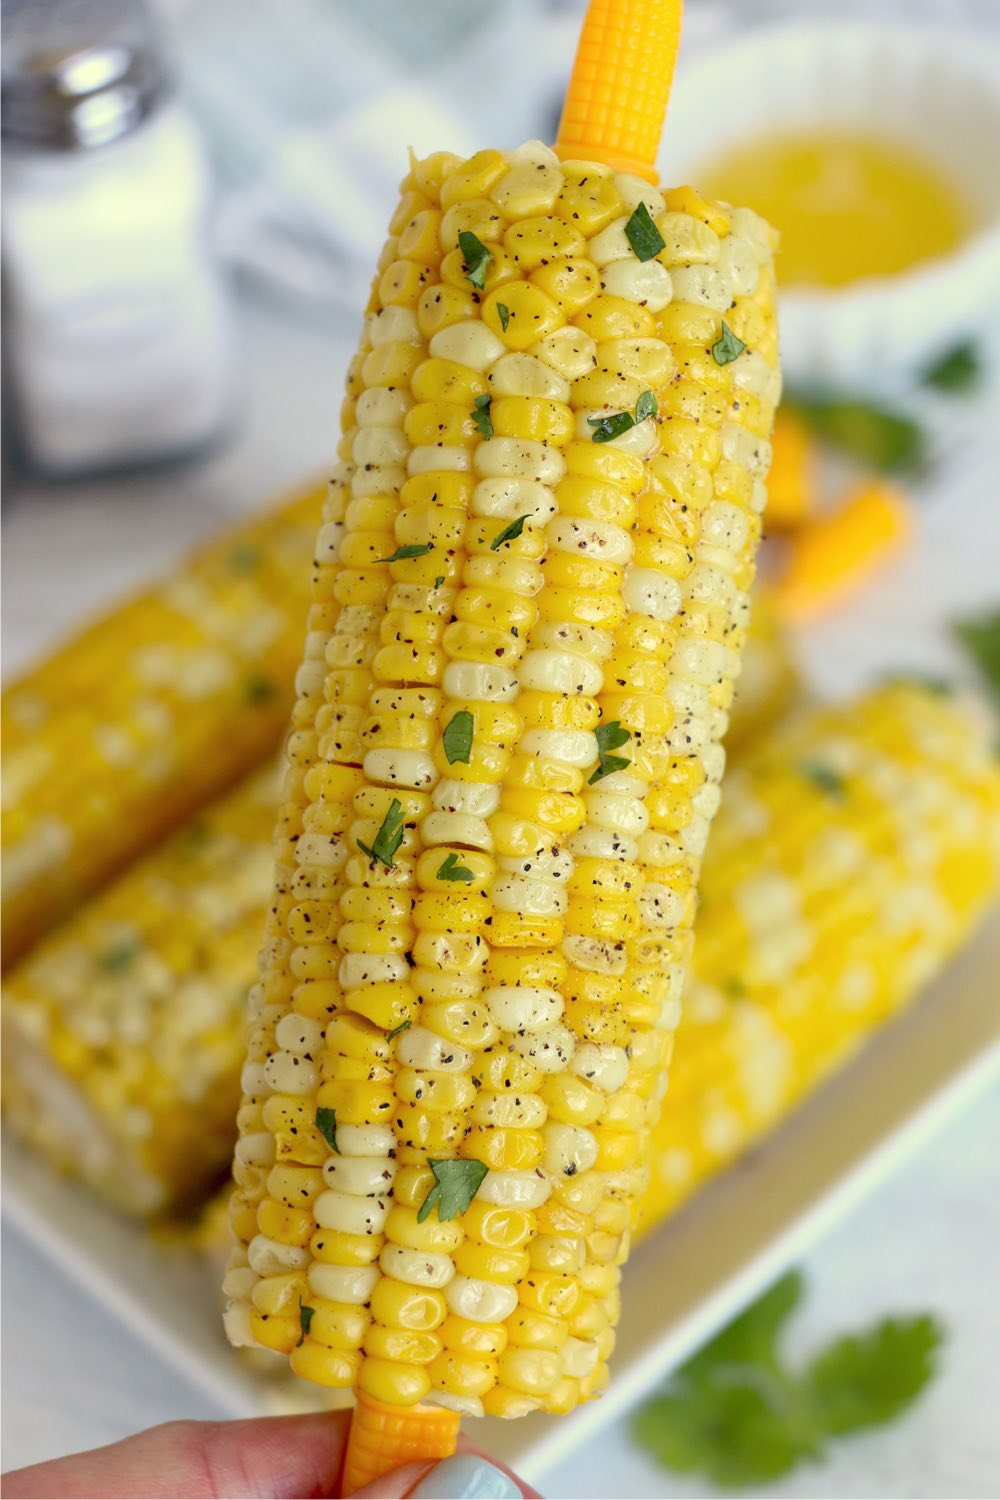 holding up a cob of corn